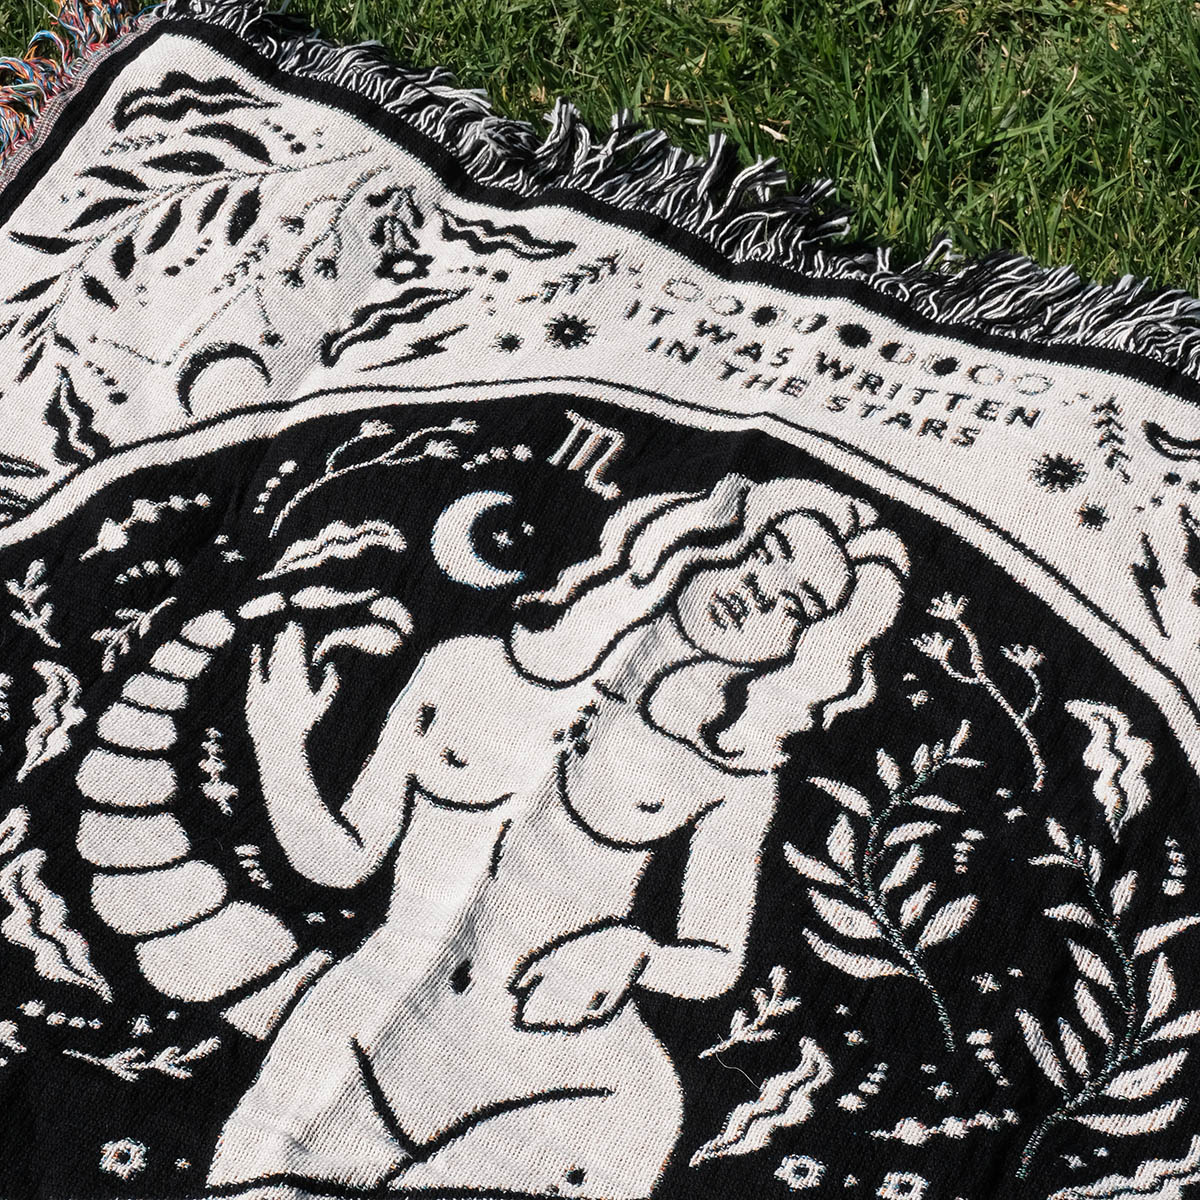 Goddess Zodiac Signs Couple Blanket